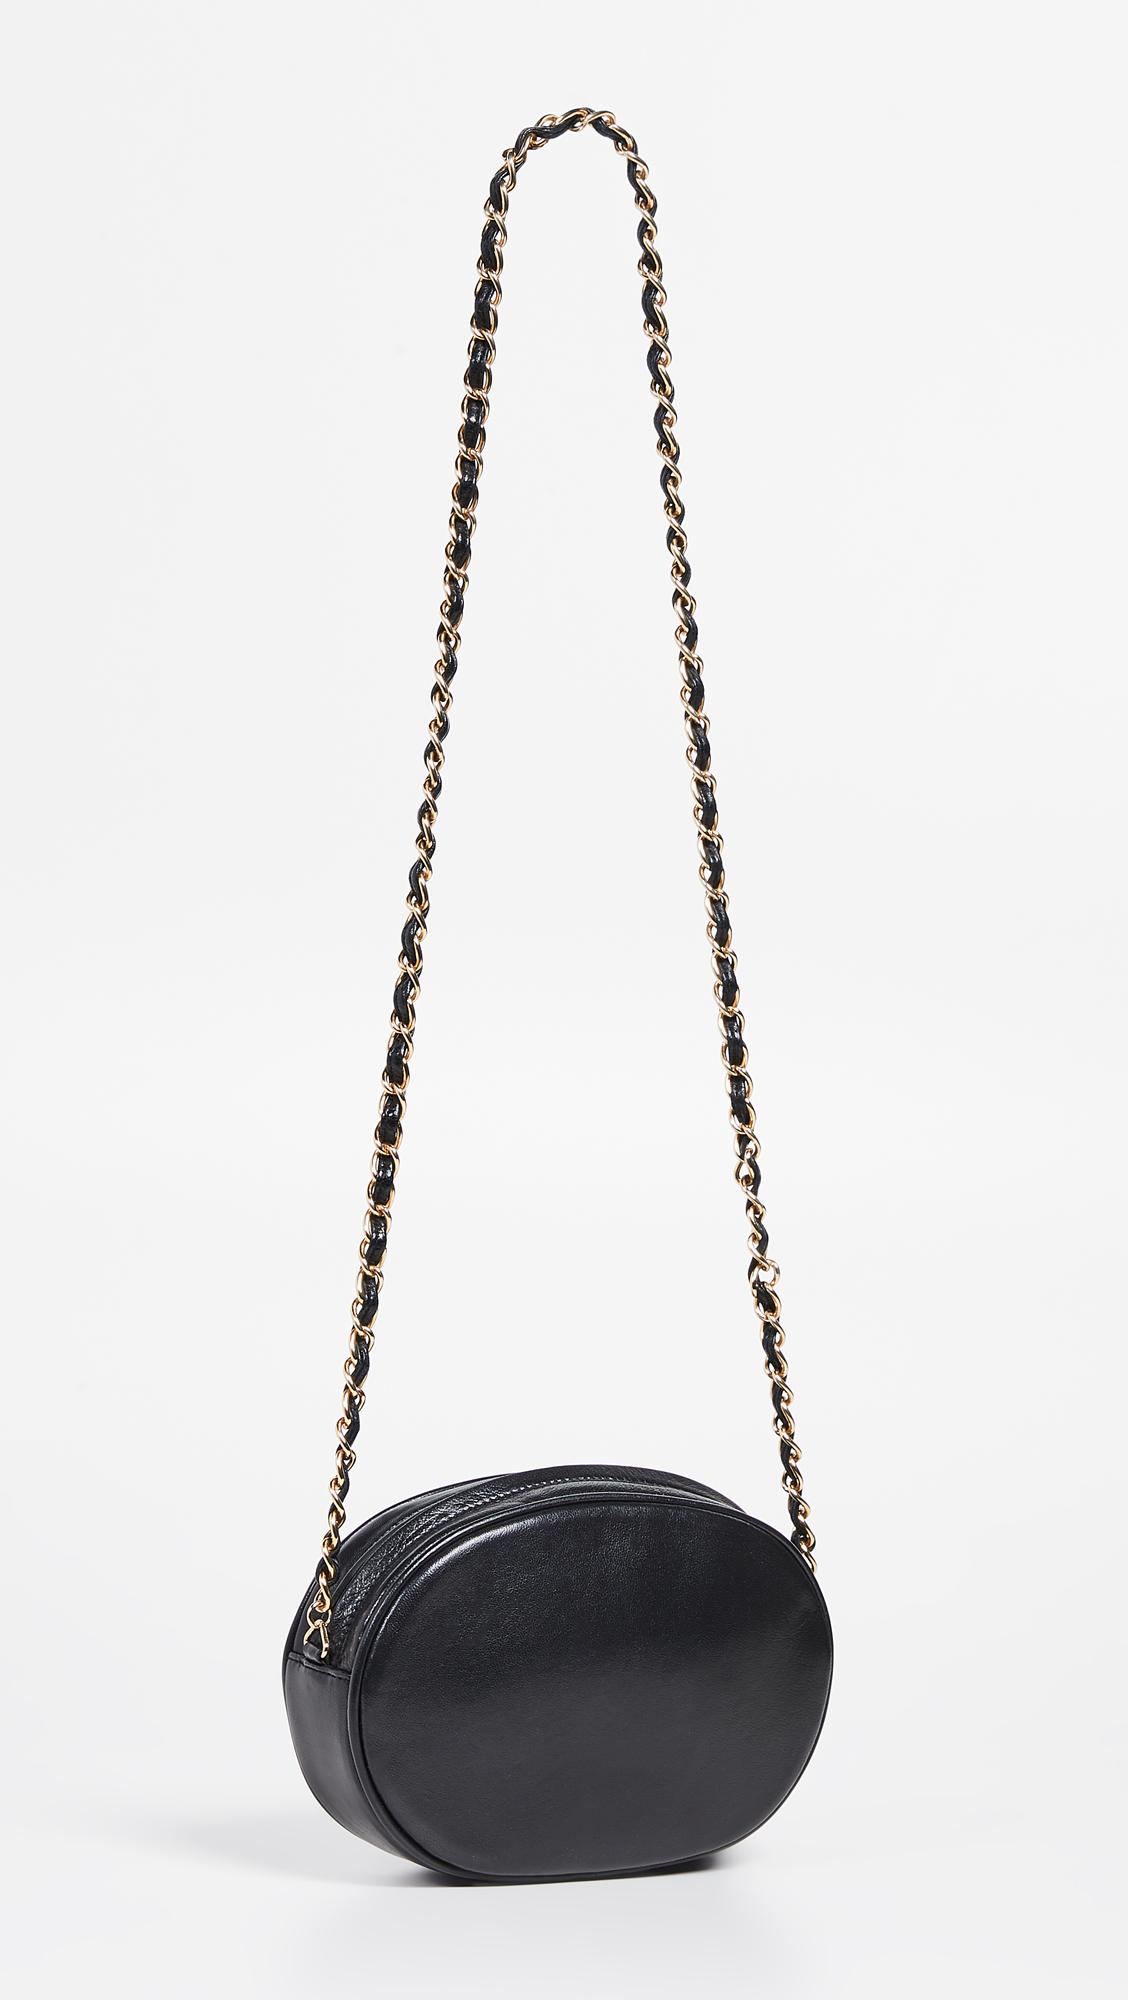 Buy Exquisite fully beaded oval-shaped sling bag Online. – Odette